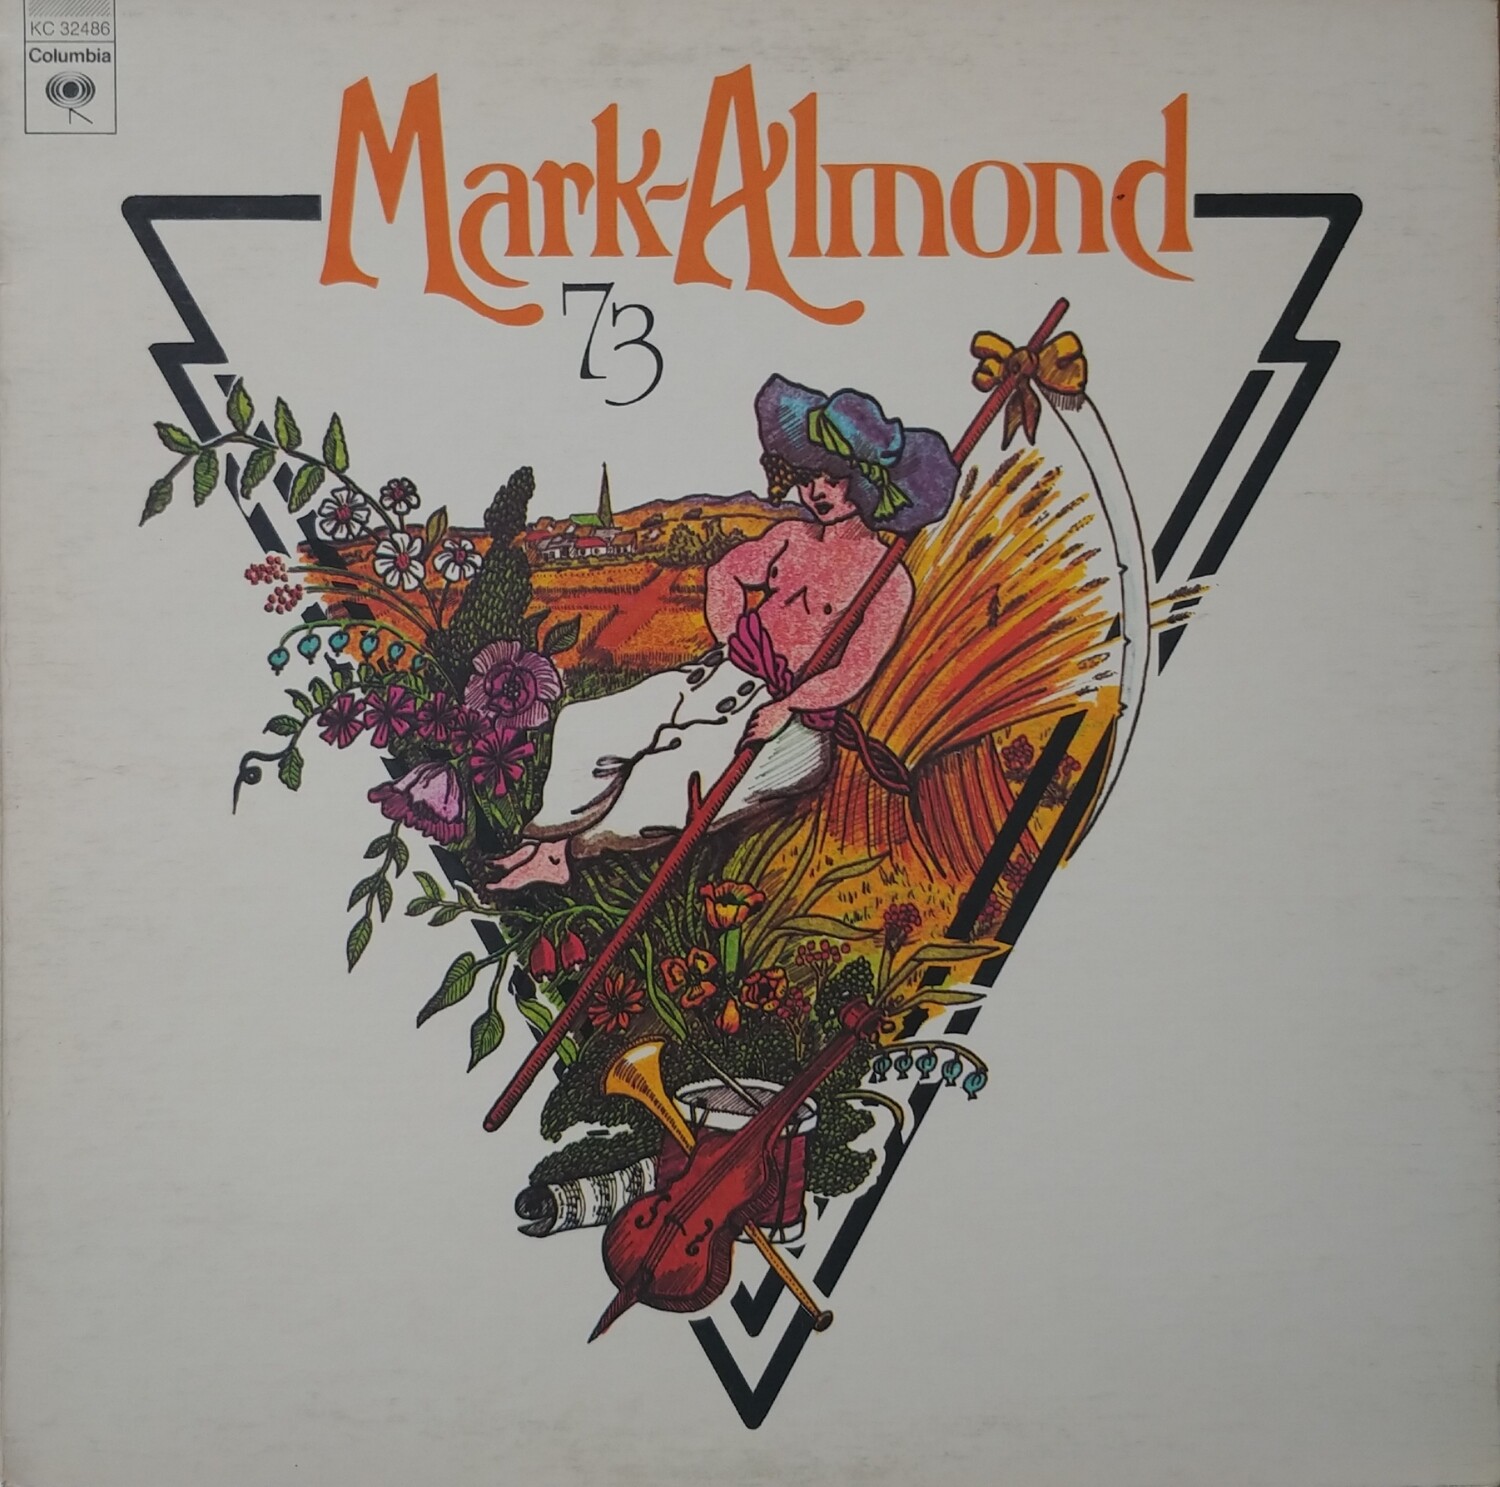 Mark Almond - 73